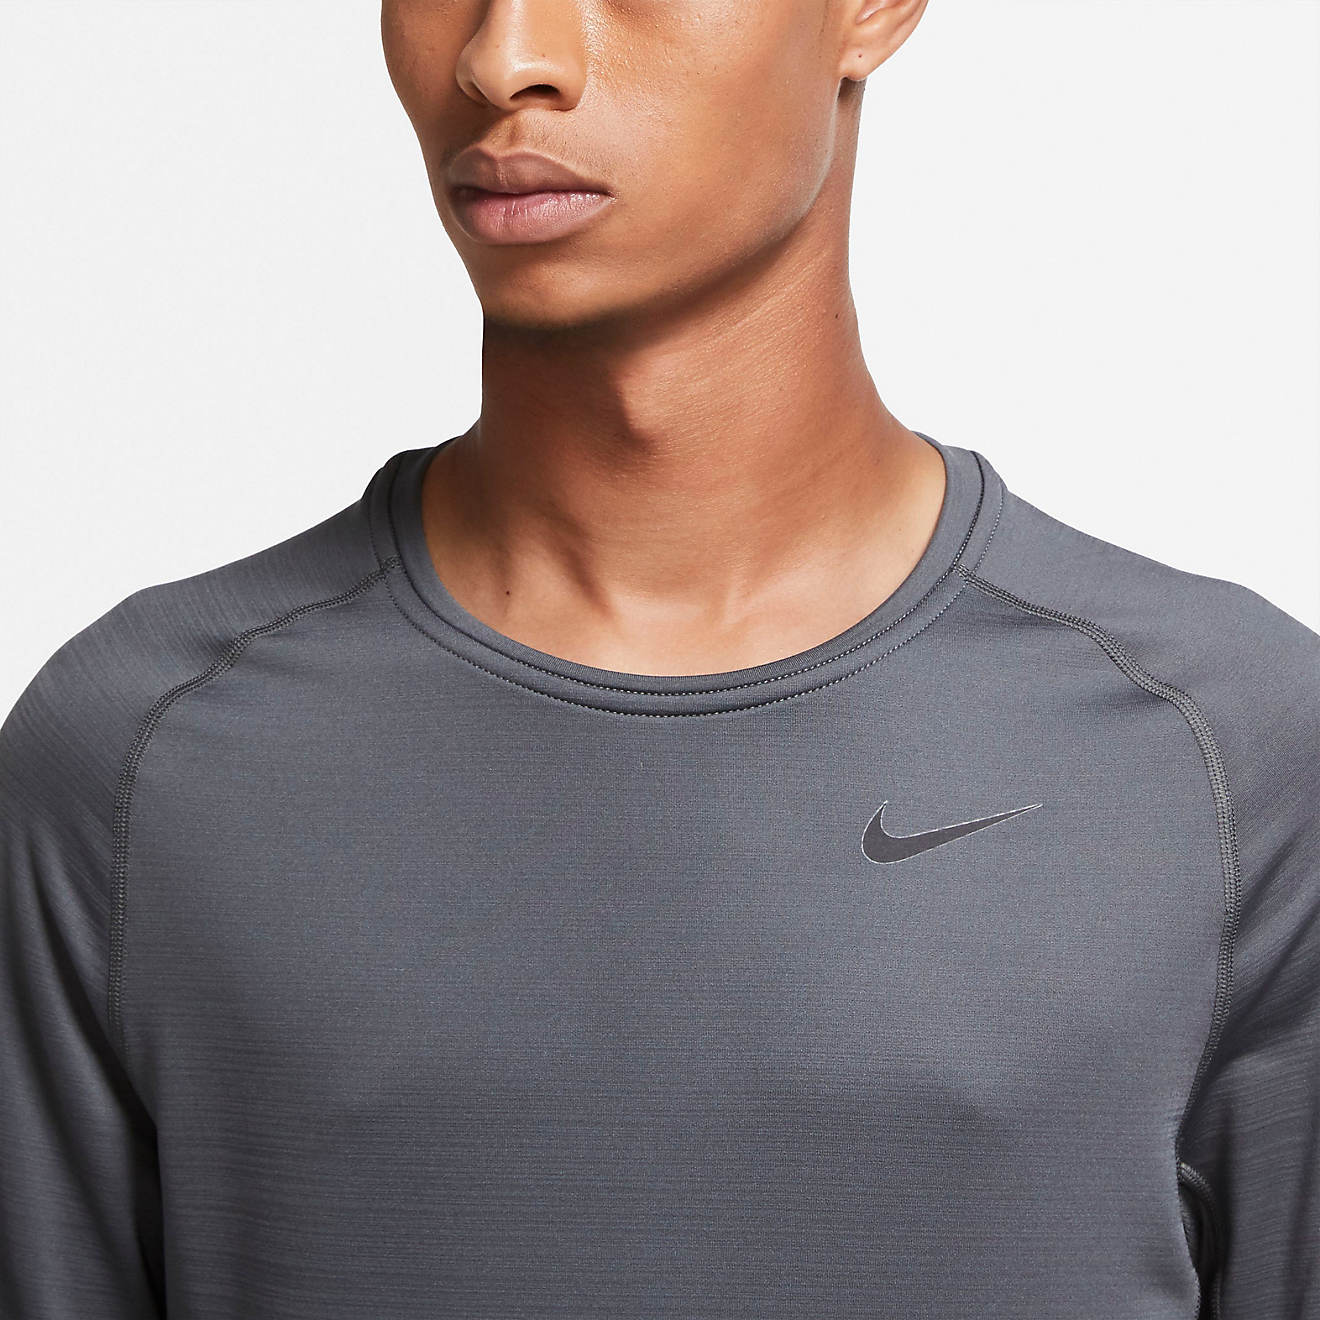 Nike Men's Pro Warm Long Sleeve Crew Top | Academy